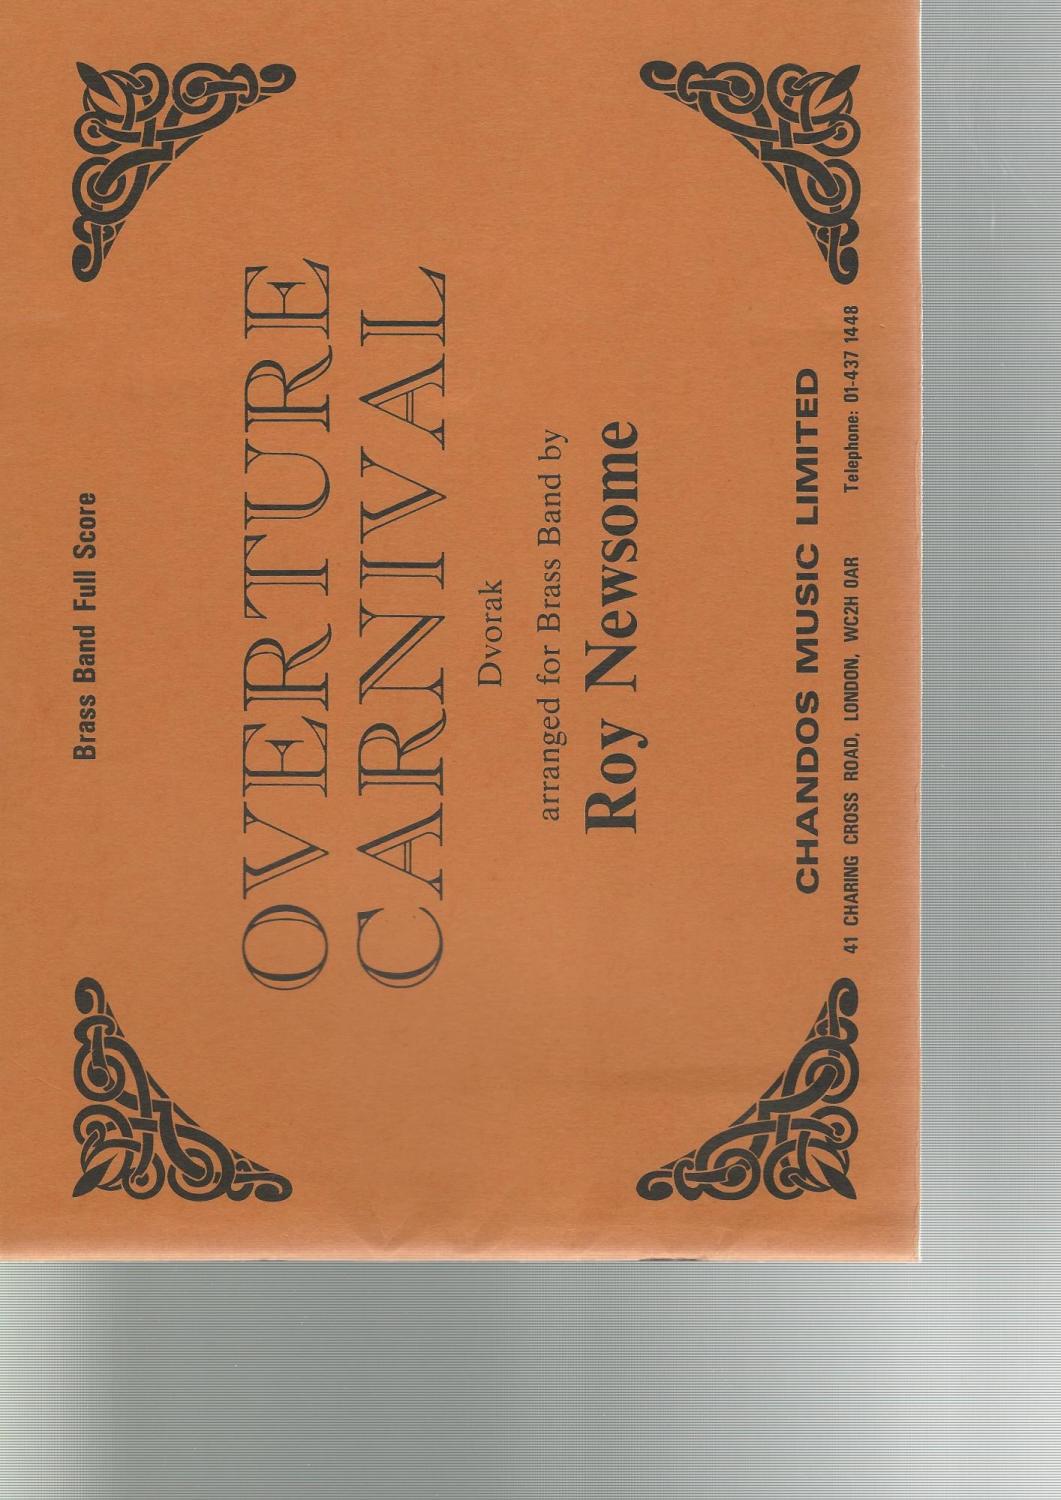 Overture Carnival for Brass Band - Dvorak, arr. Roy Newsome